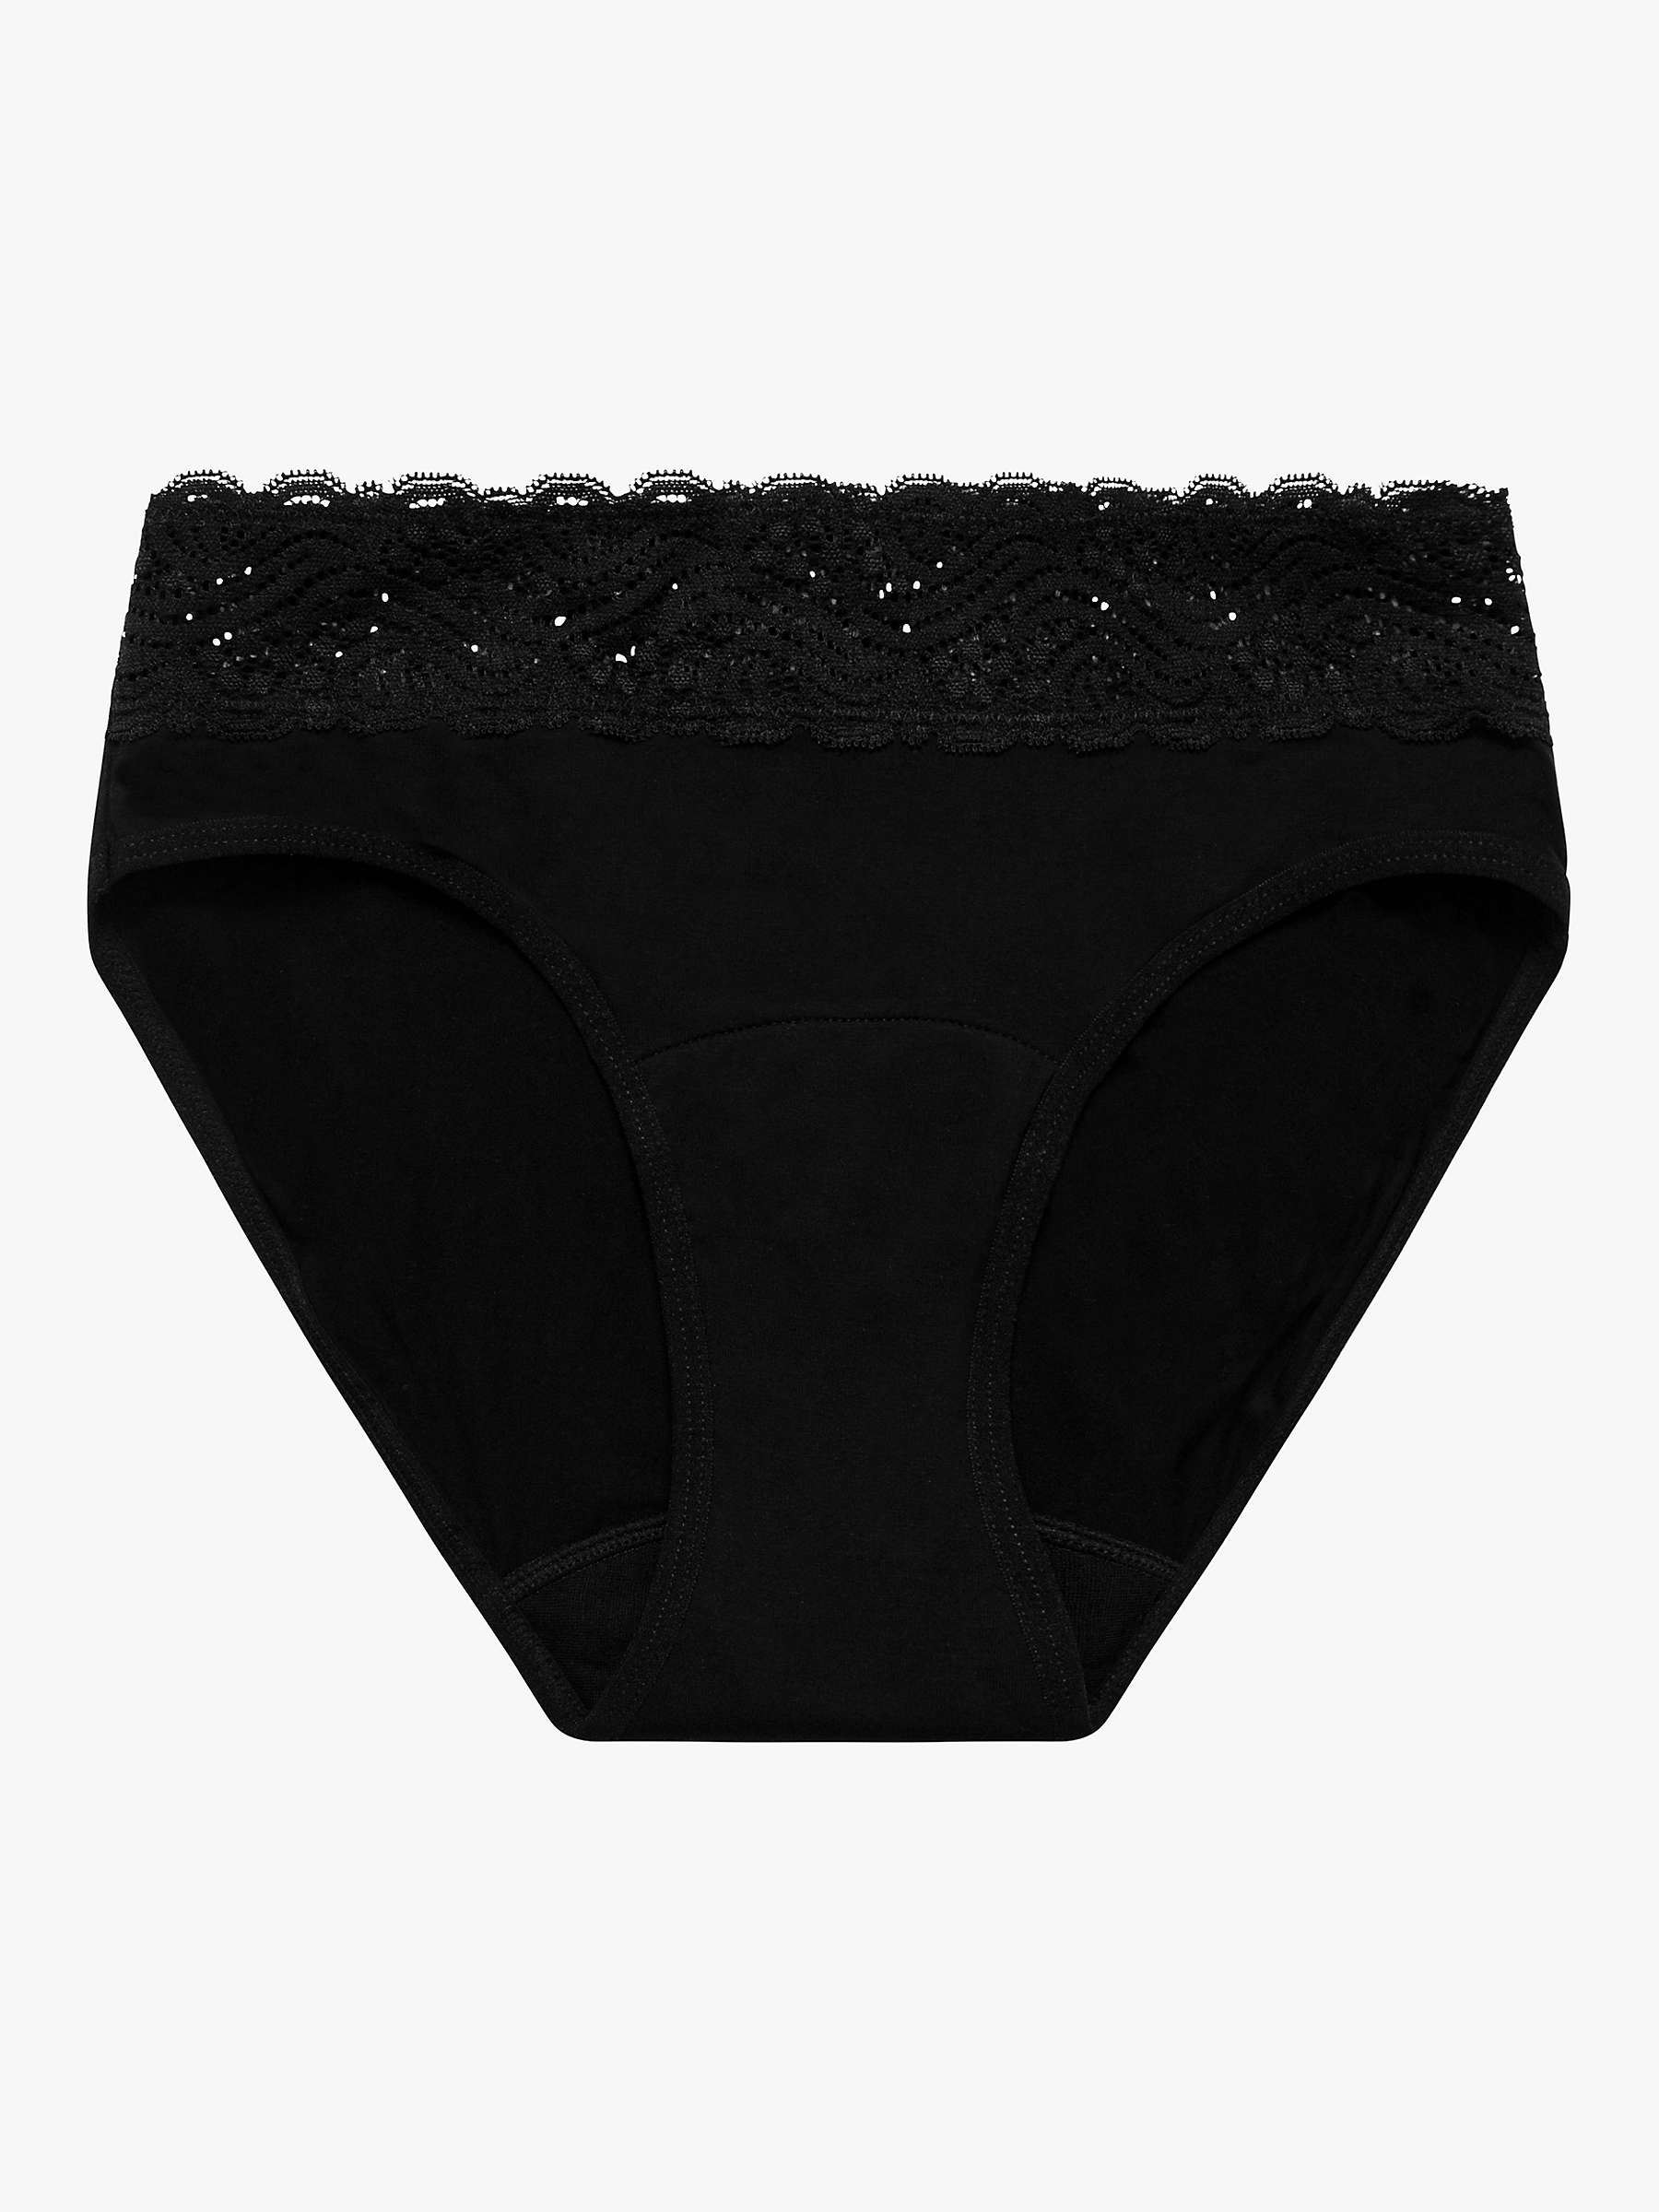 Buy Modibodi Sensual High Waist Bikini Light to Moderate Absorbency Knickers Online at johnlewis.com